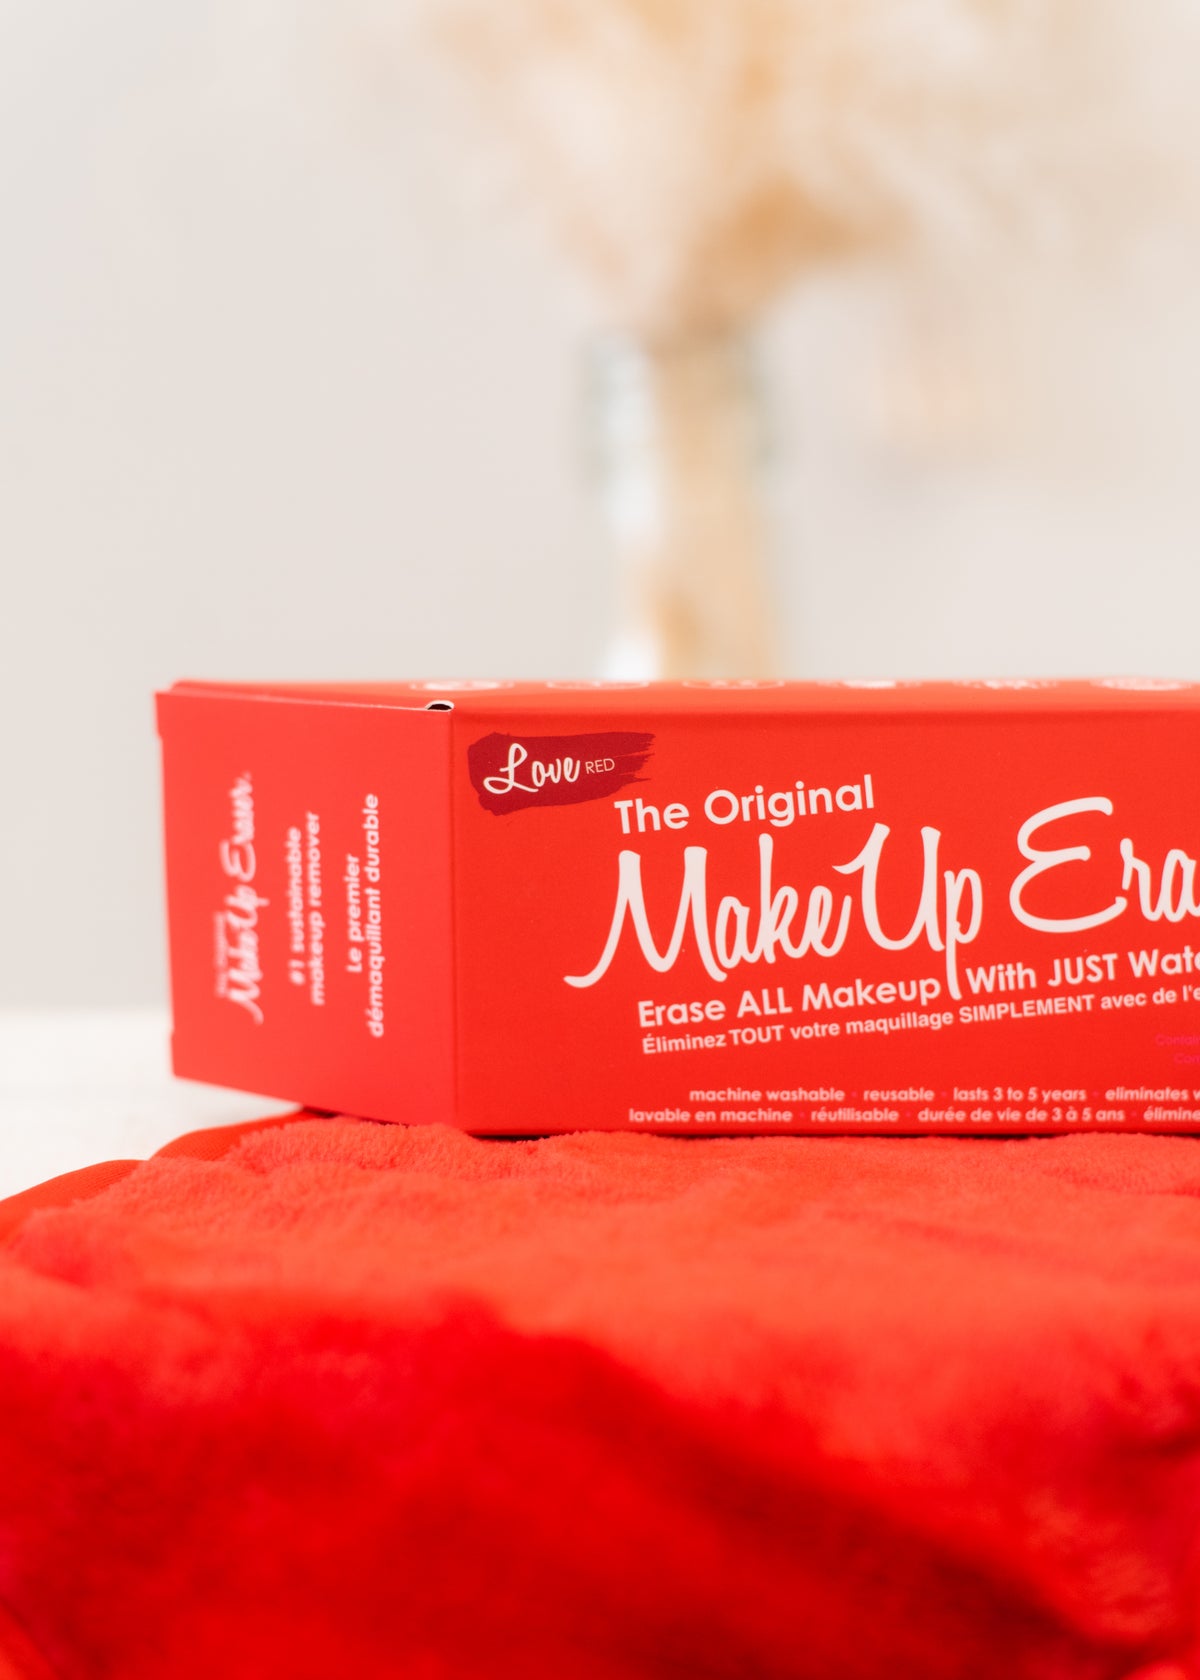 The Love Red Makeup Eraser